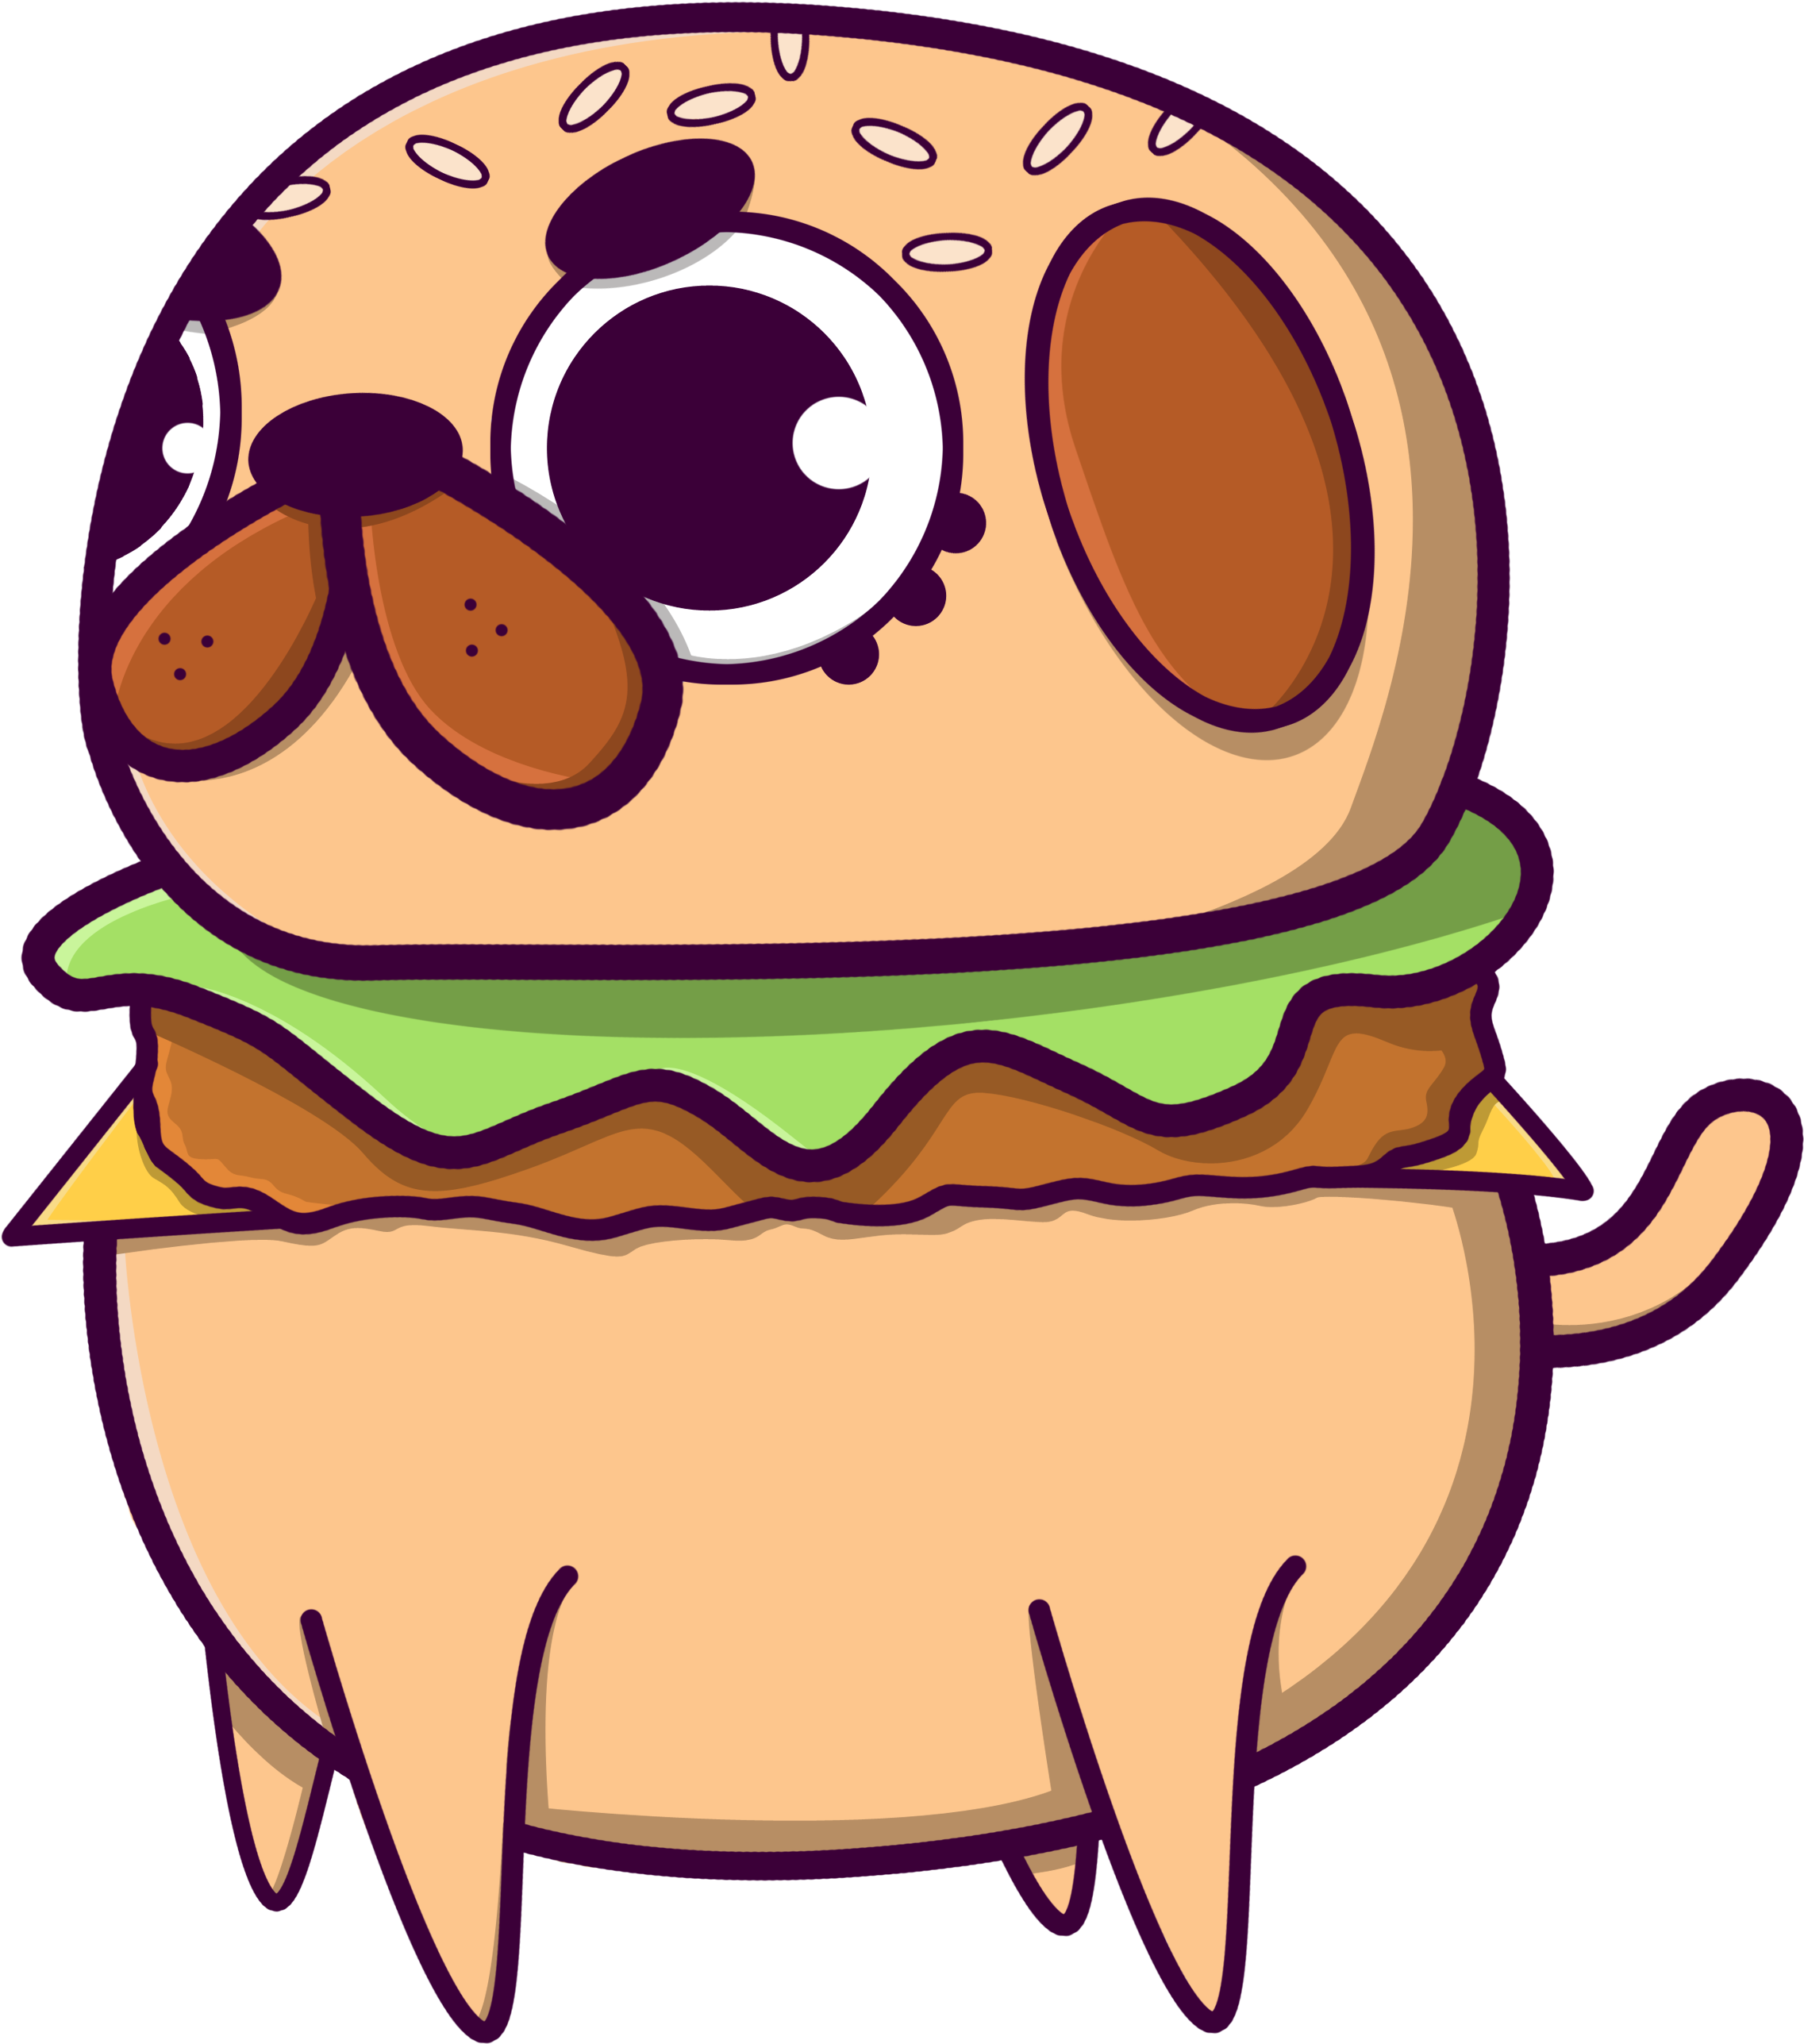 Inshare - Pug Burger (3000x3500)